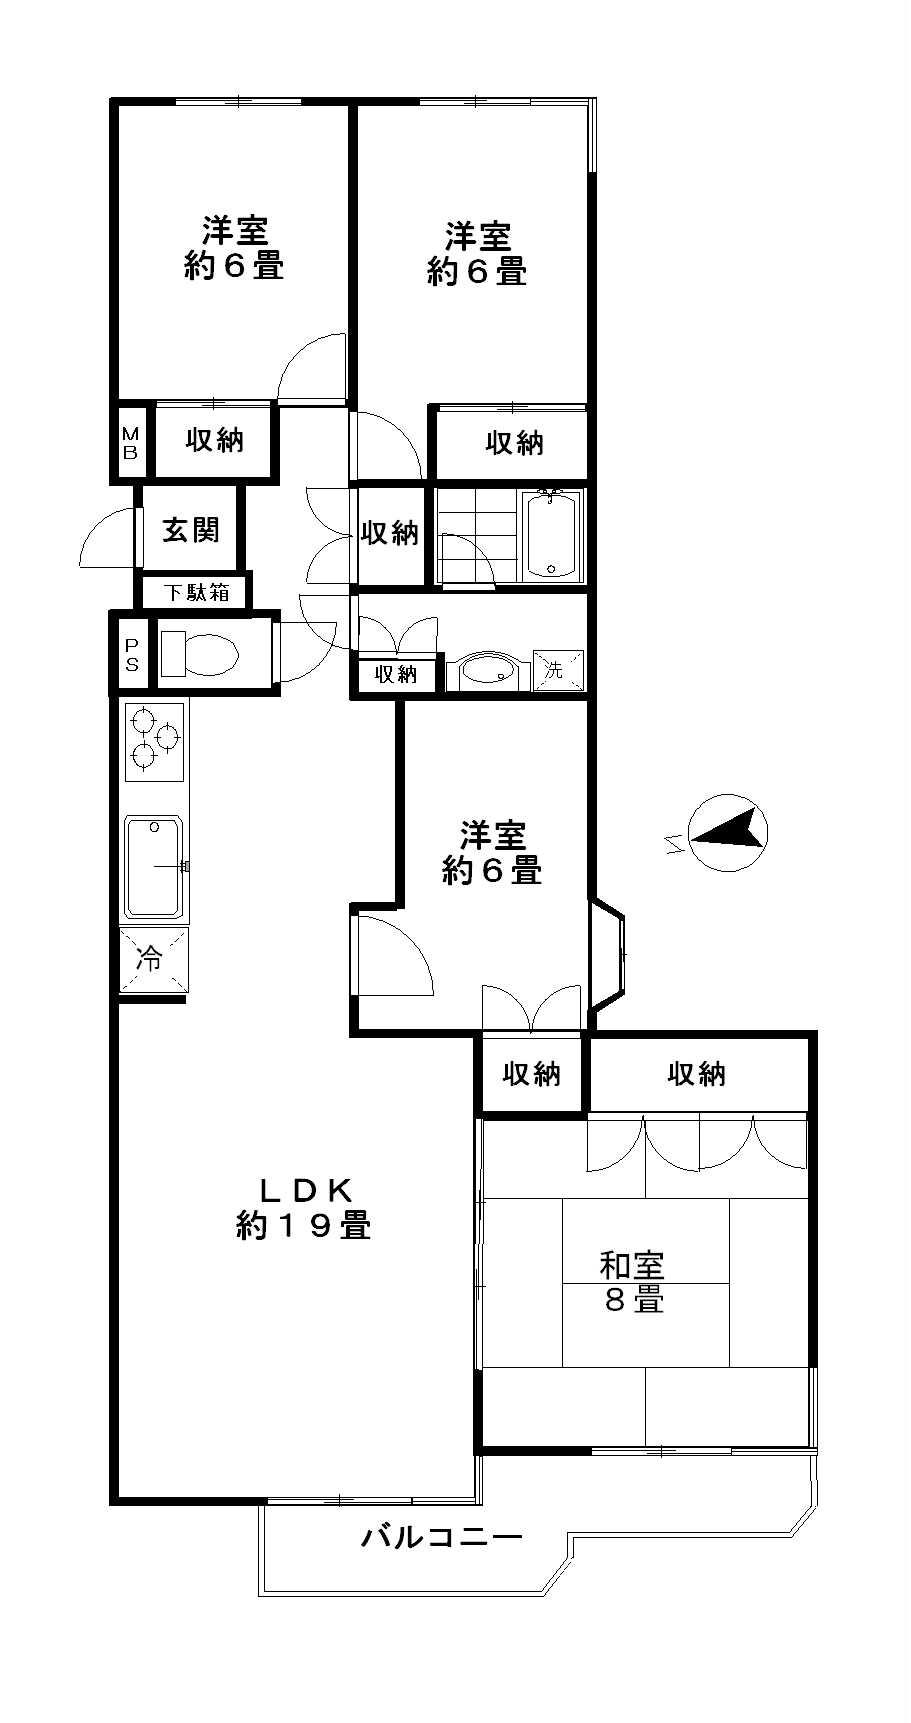 Floor plan. 4LDK, Price 18,800,000 yen, Footprint 101.14 sq m , Balcony area 8.44 sq m